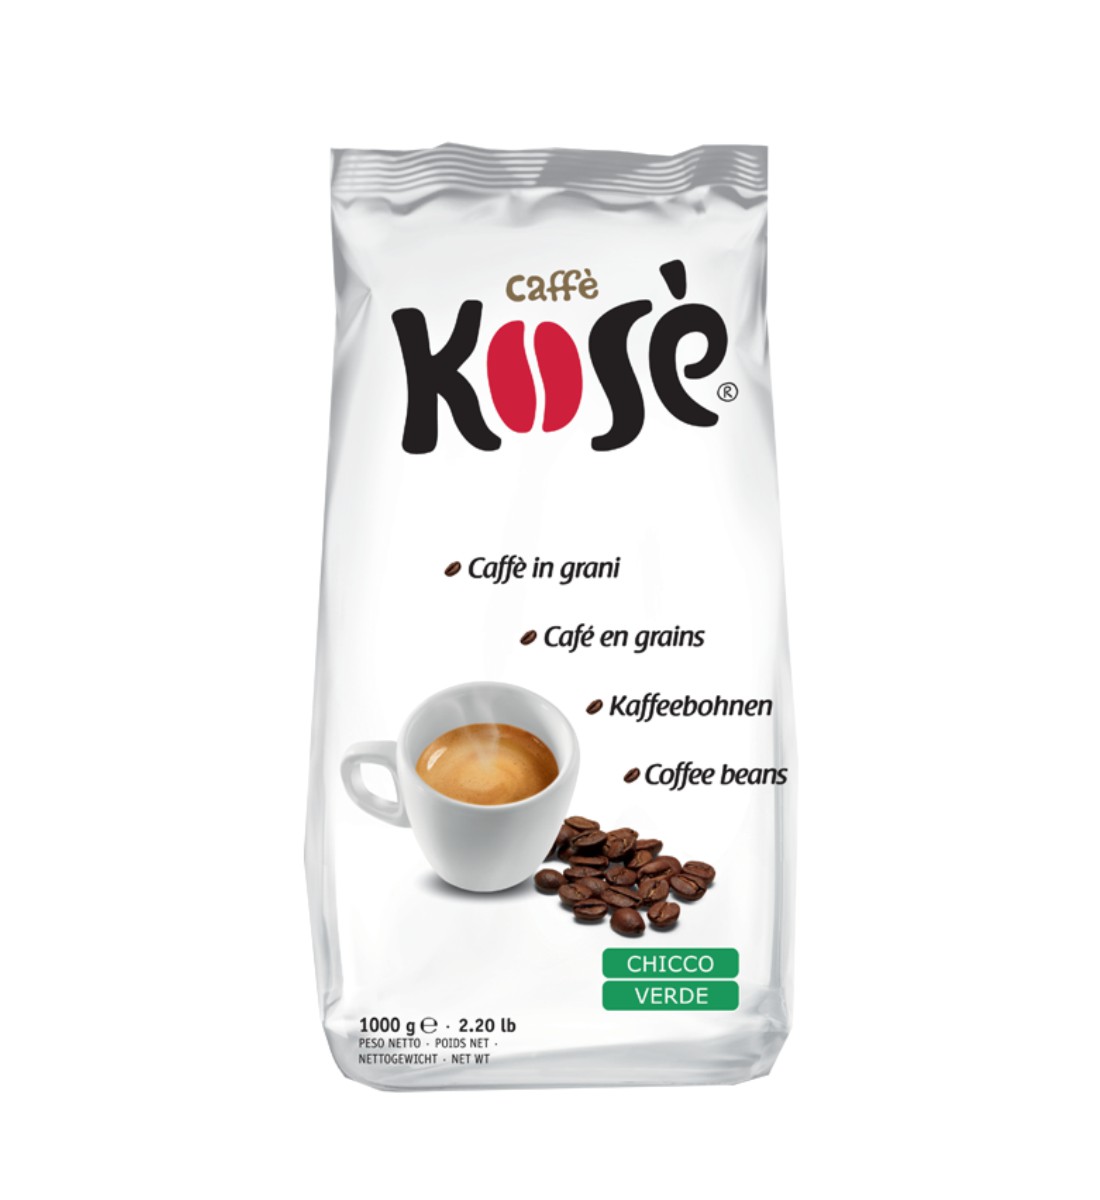 kimbo caffe kose chicco verde 1 kg boabe Cafea Boabe Fortuna Verde 1 Kg